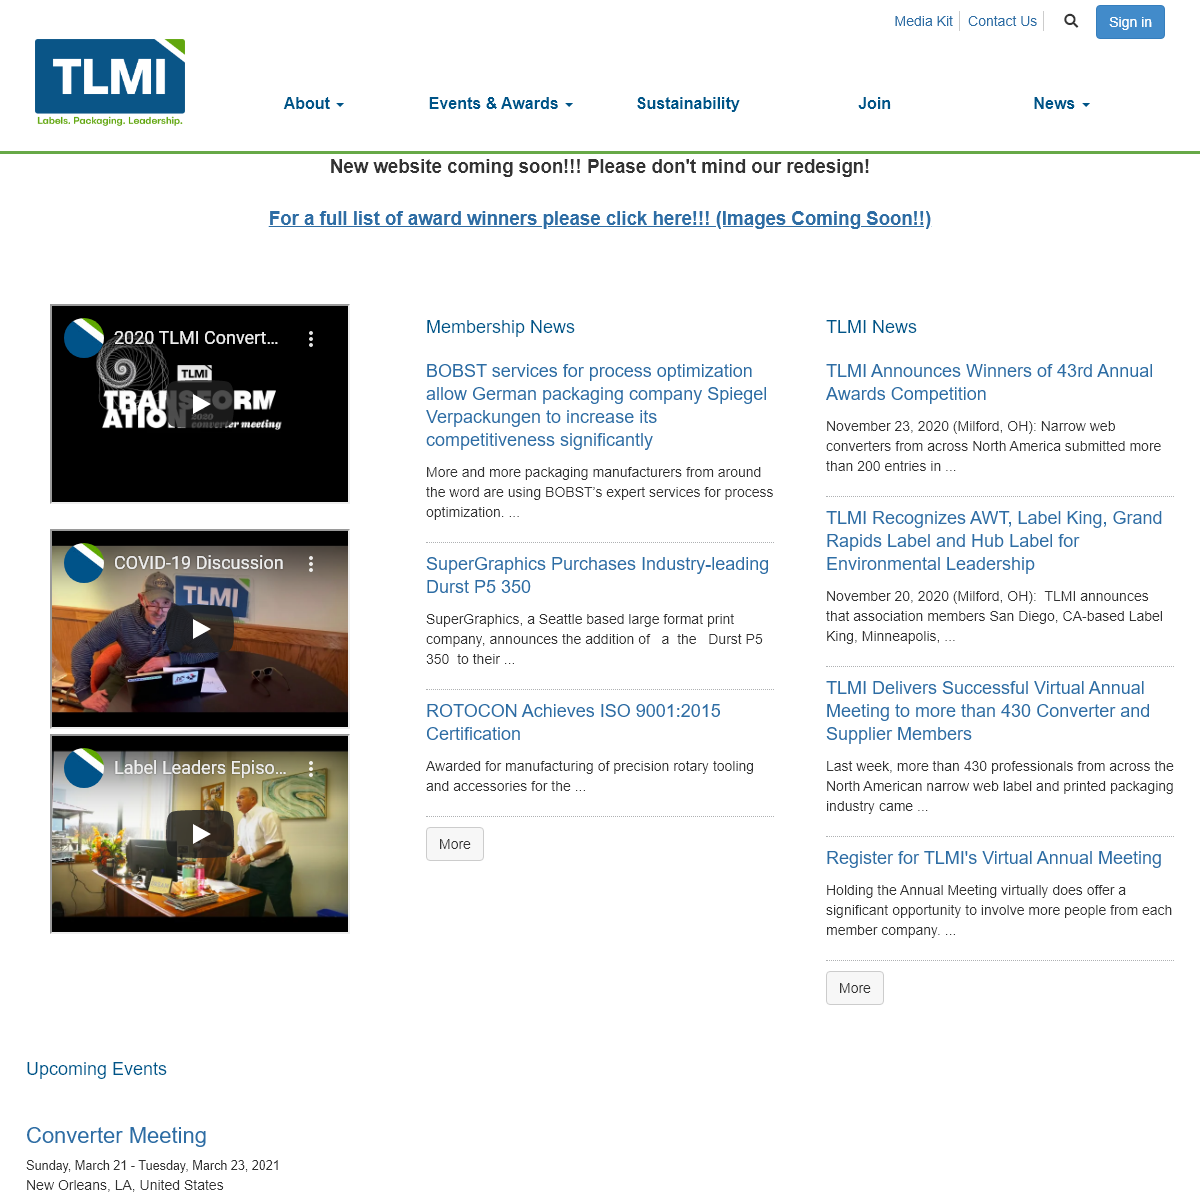 A complete backup of tlmi.com